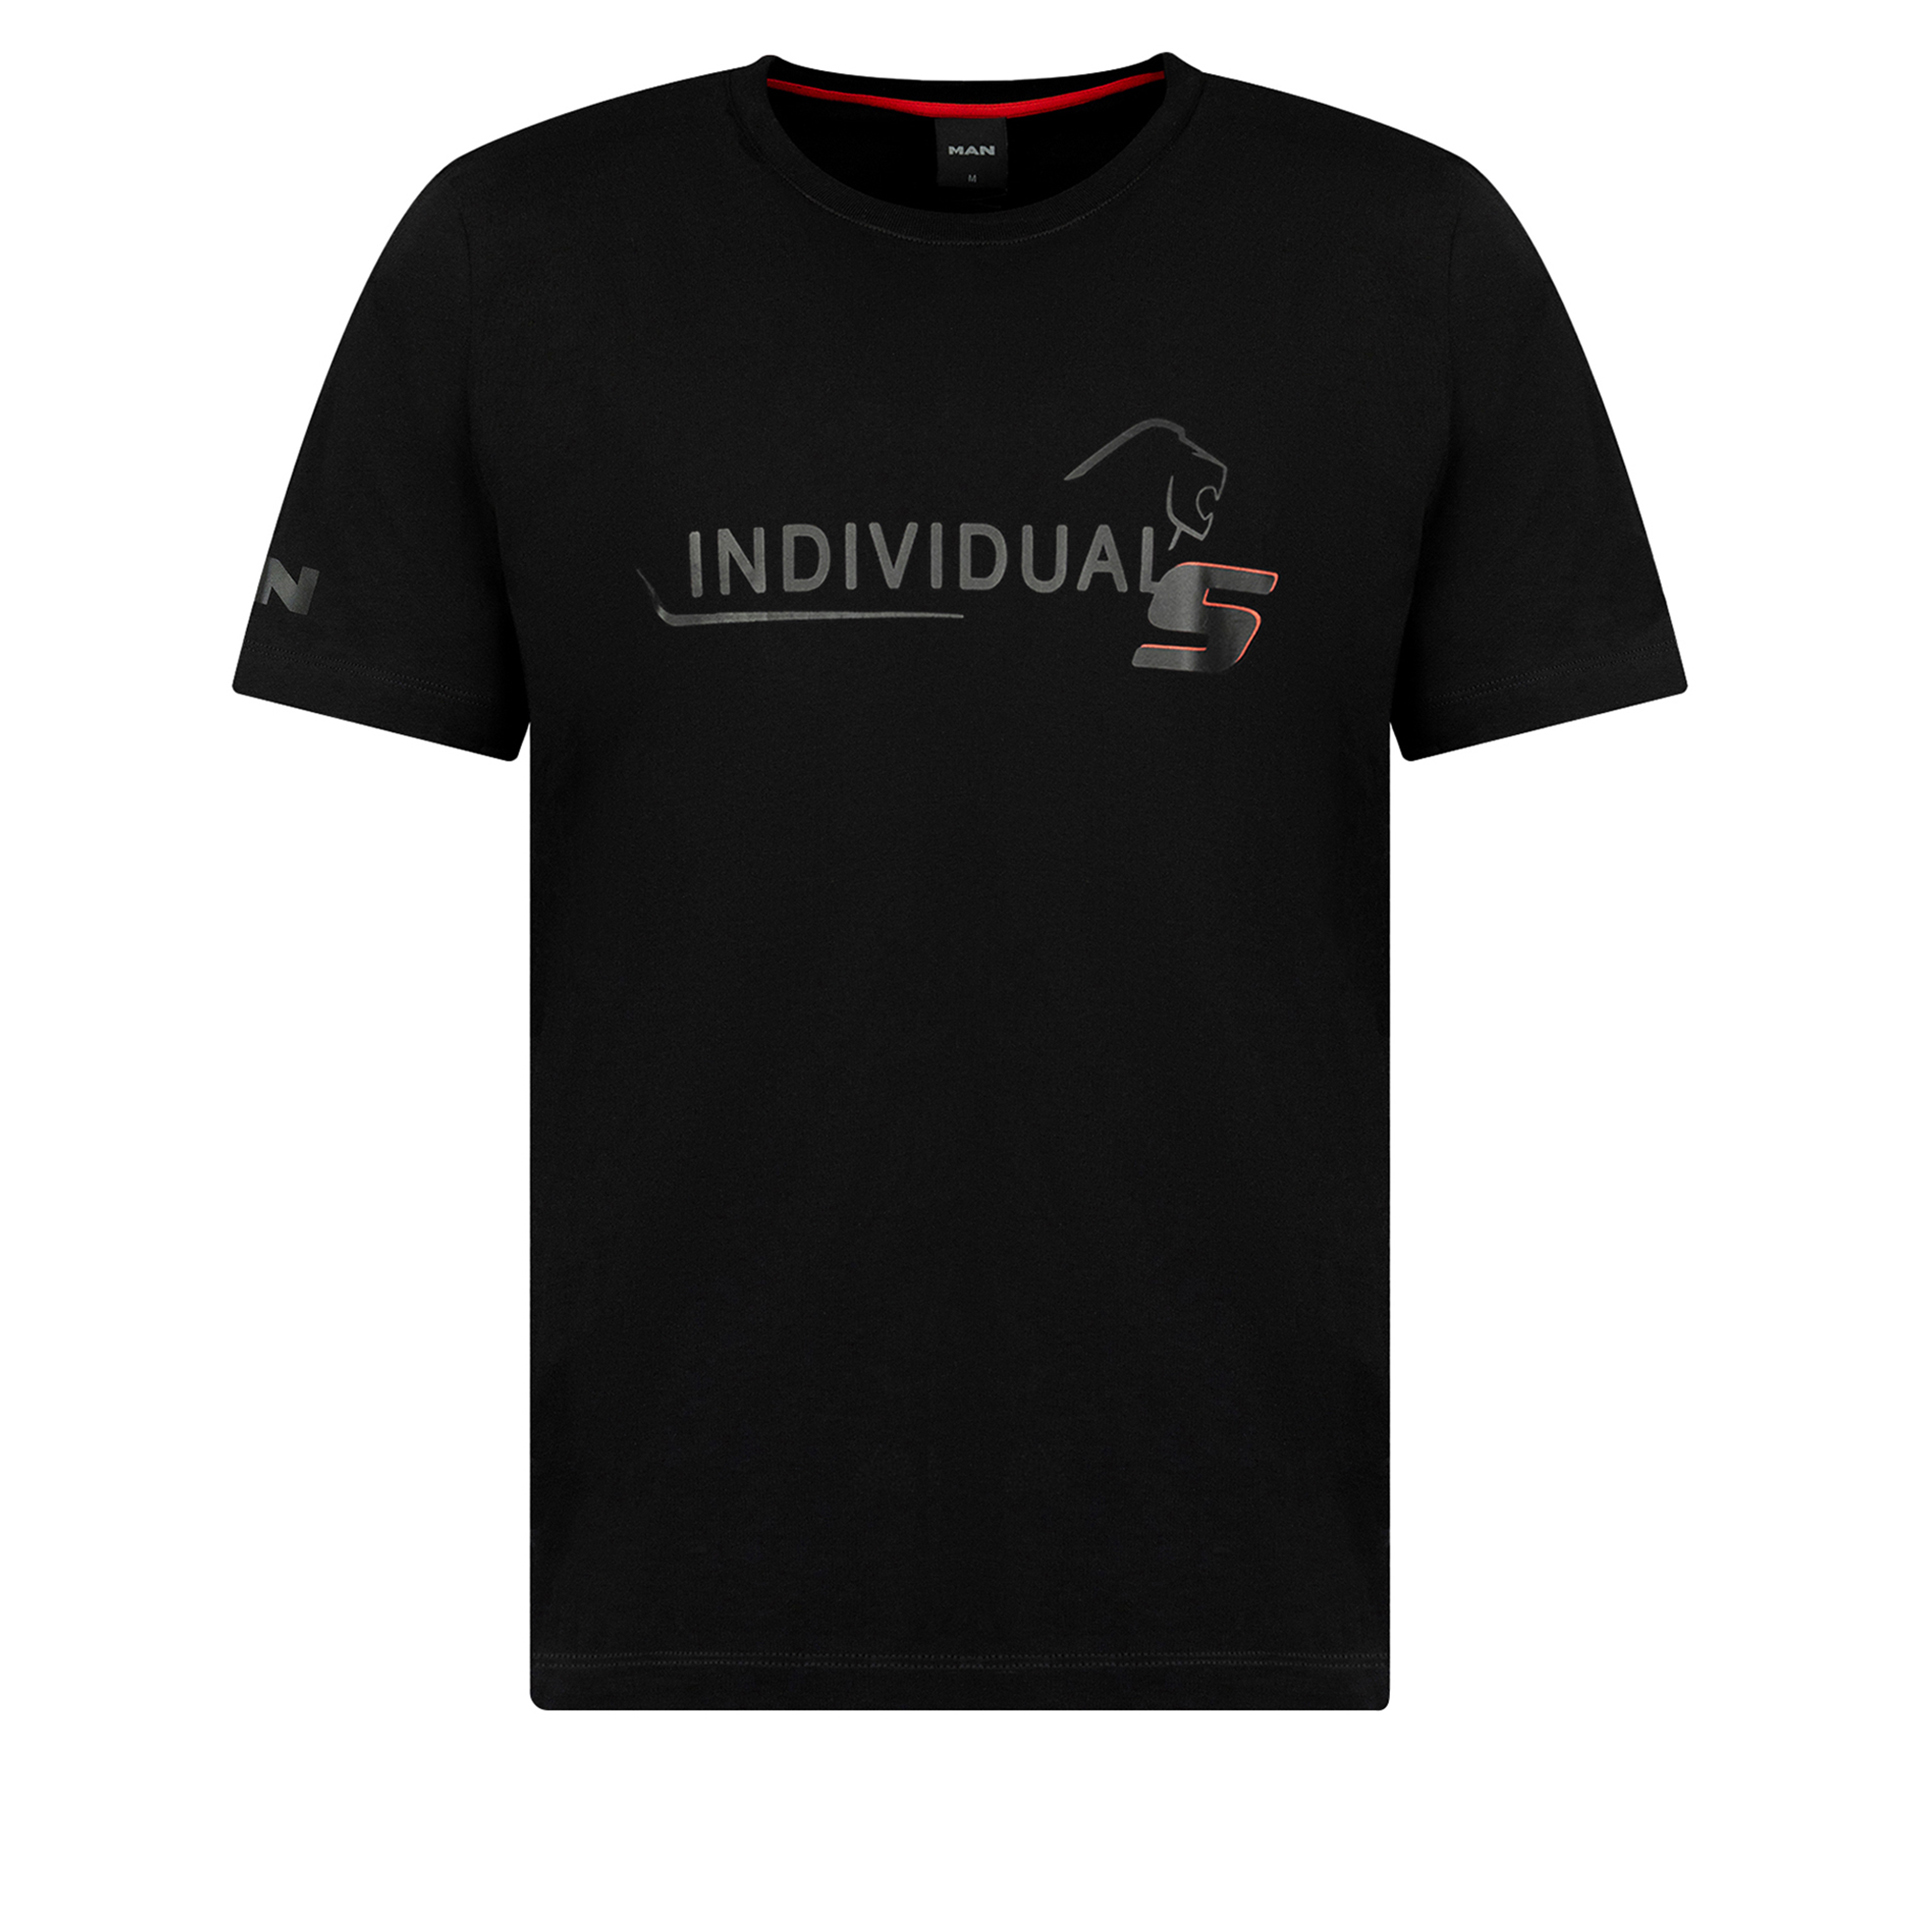 MAN Individual S Men's Premium T-Shirt Black in Black